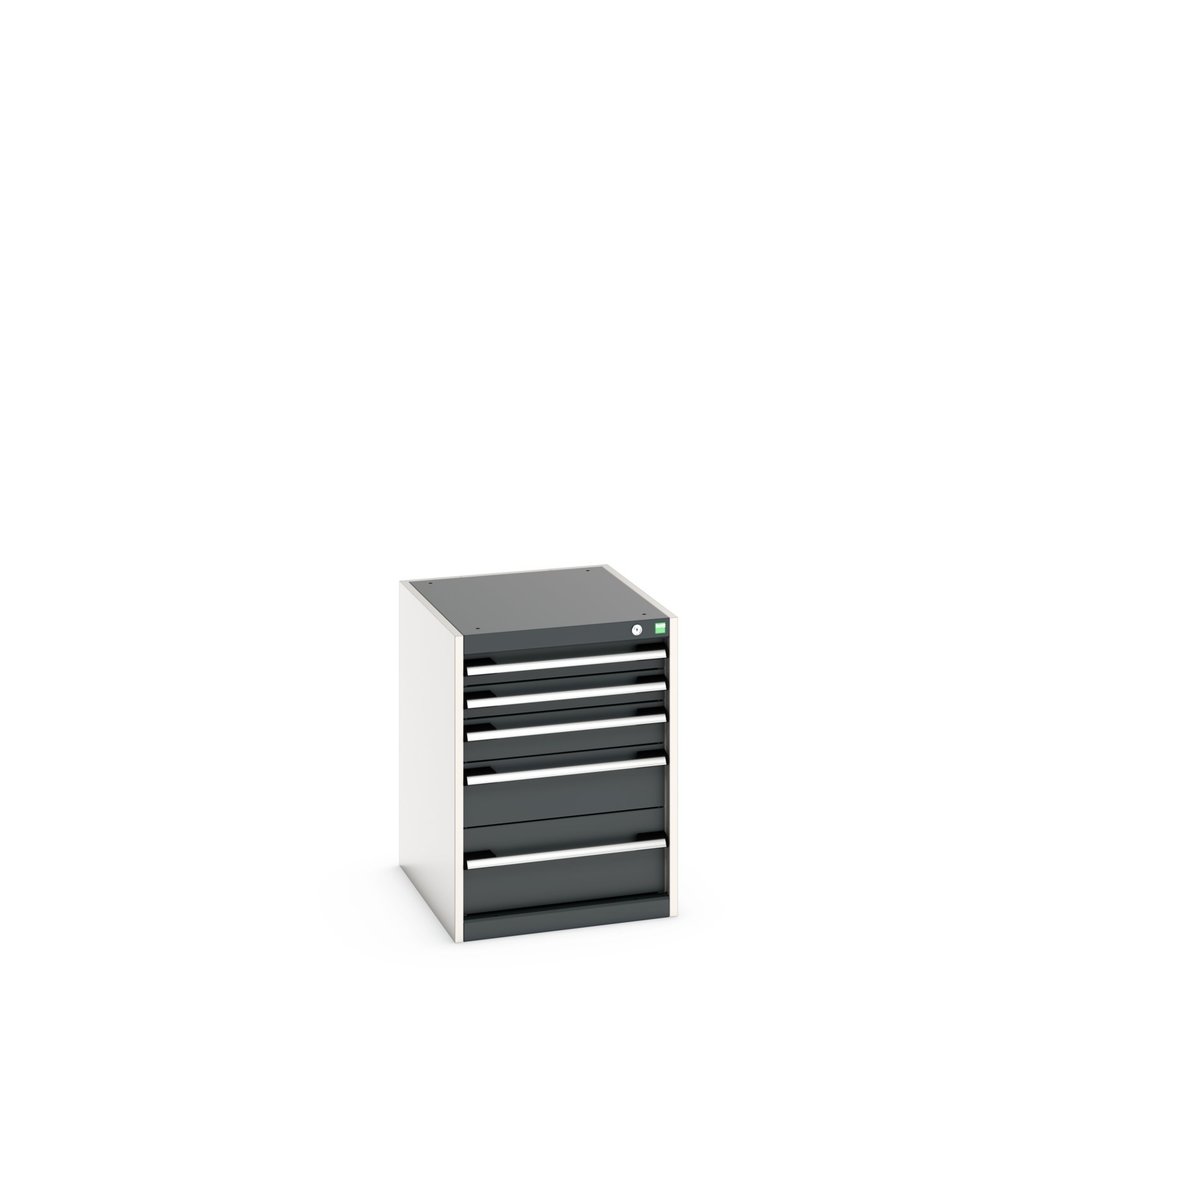 40018027. - cubio drawer cabinet